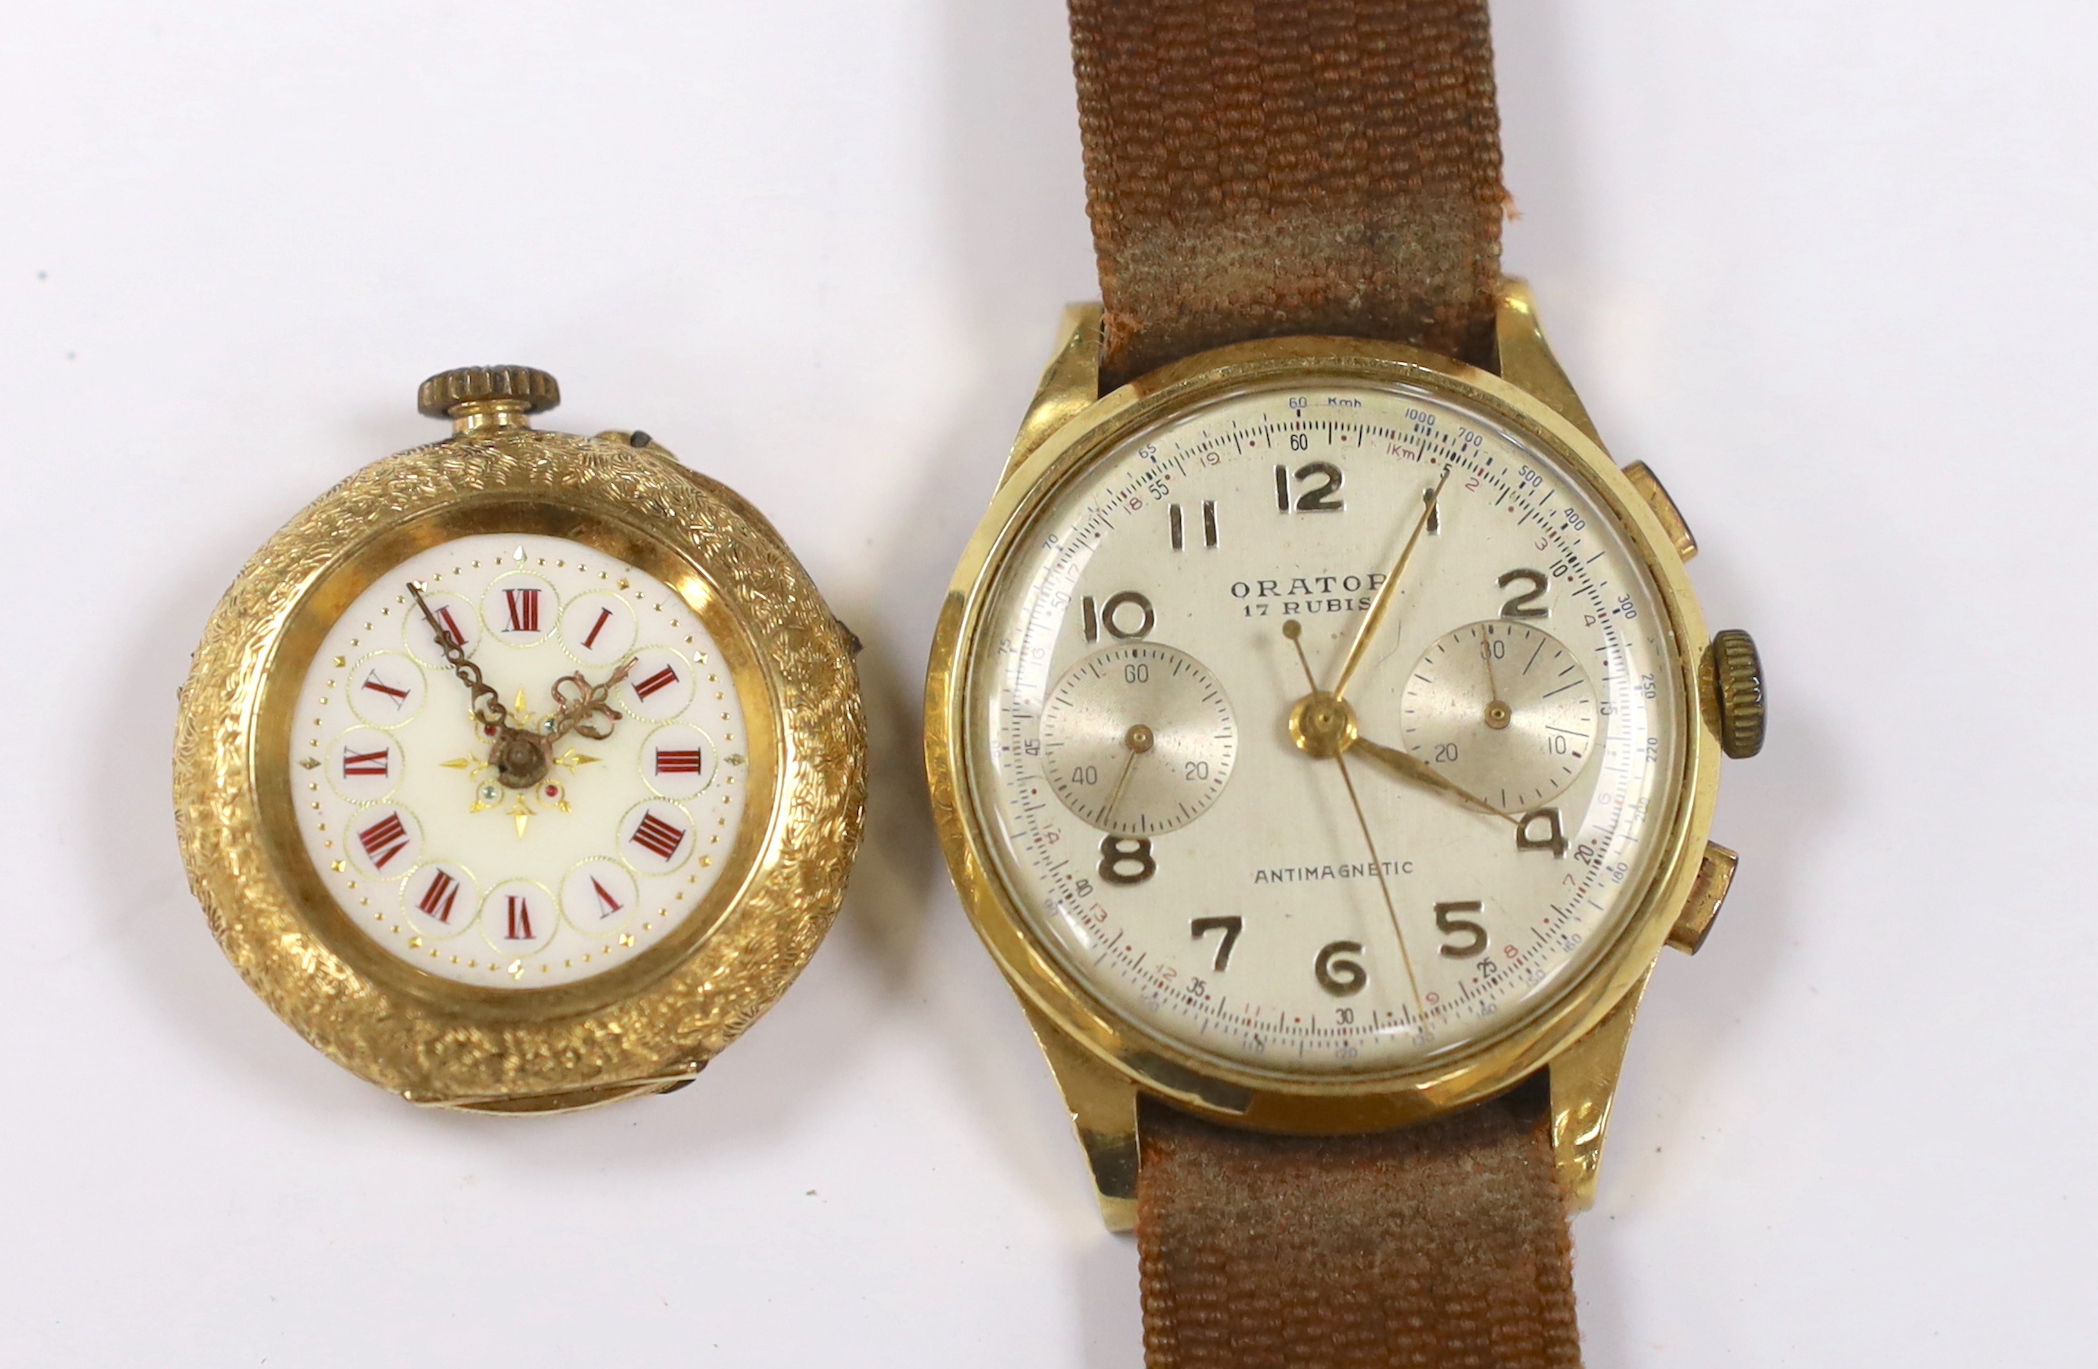 A gentleman's 18k Orator manual wind wrist watch (a.f.) and an 18k fob watch.